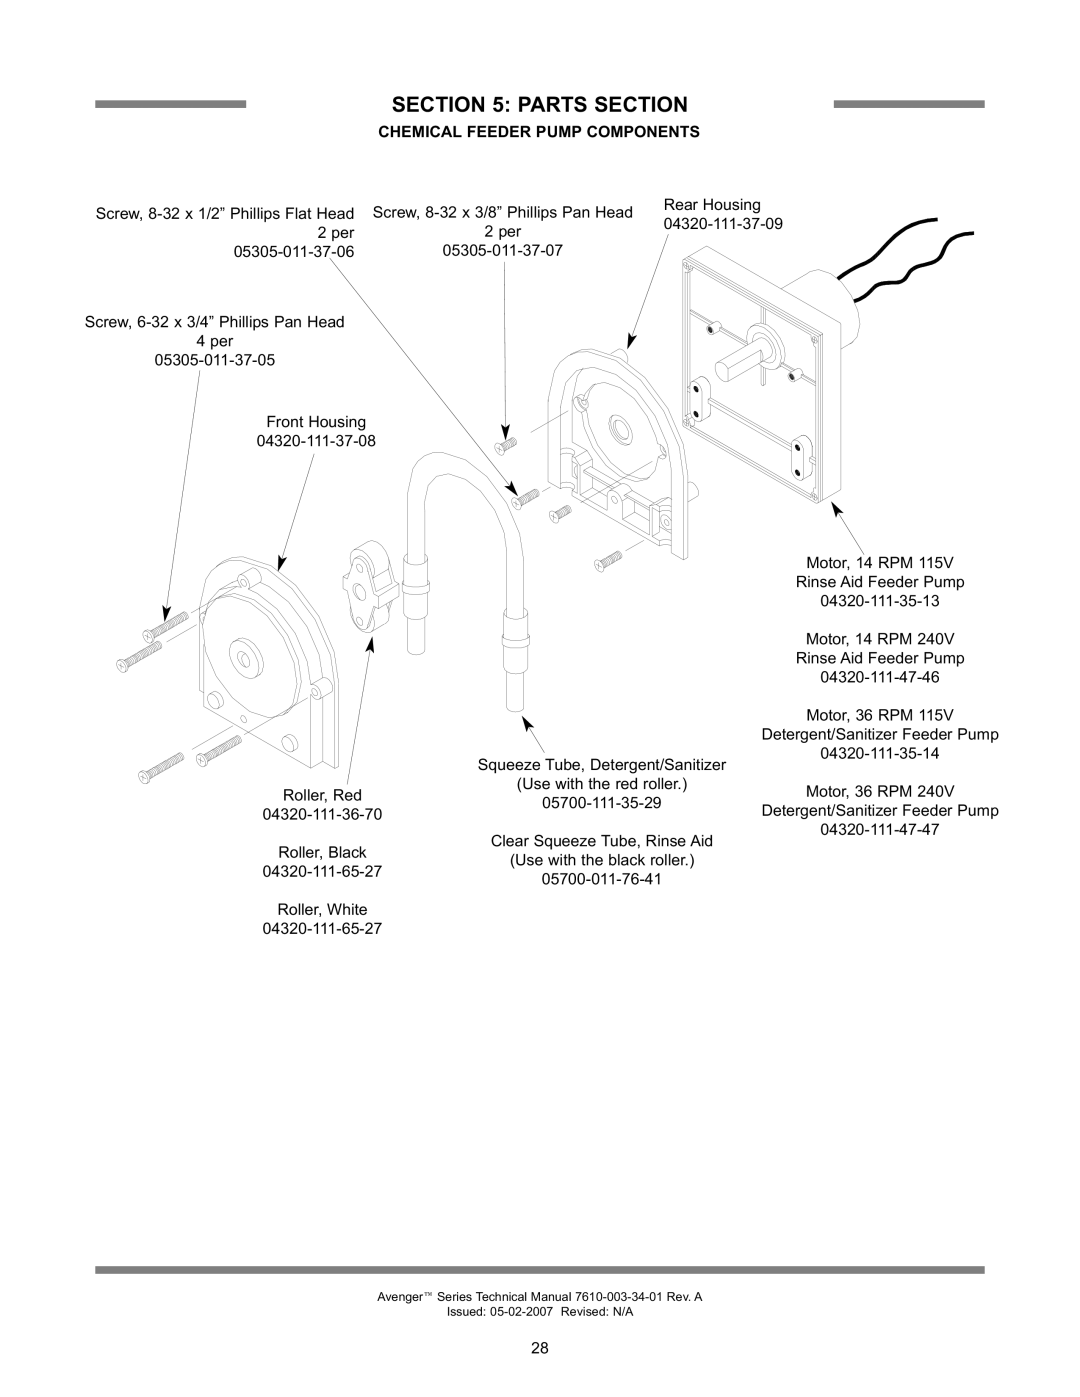 Jackson Avenger LT, Avenger HT technical manual Chemical Feeder Pump Components, Parts Section 